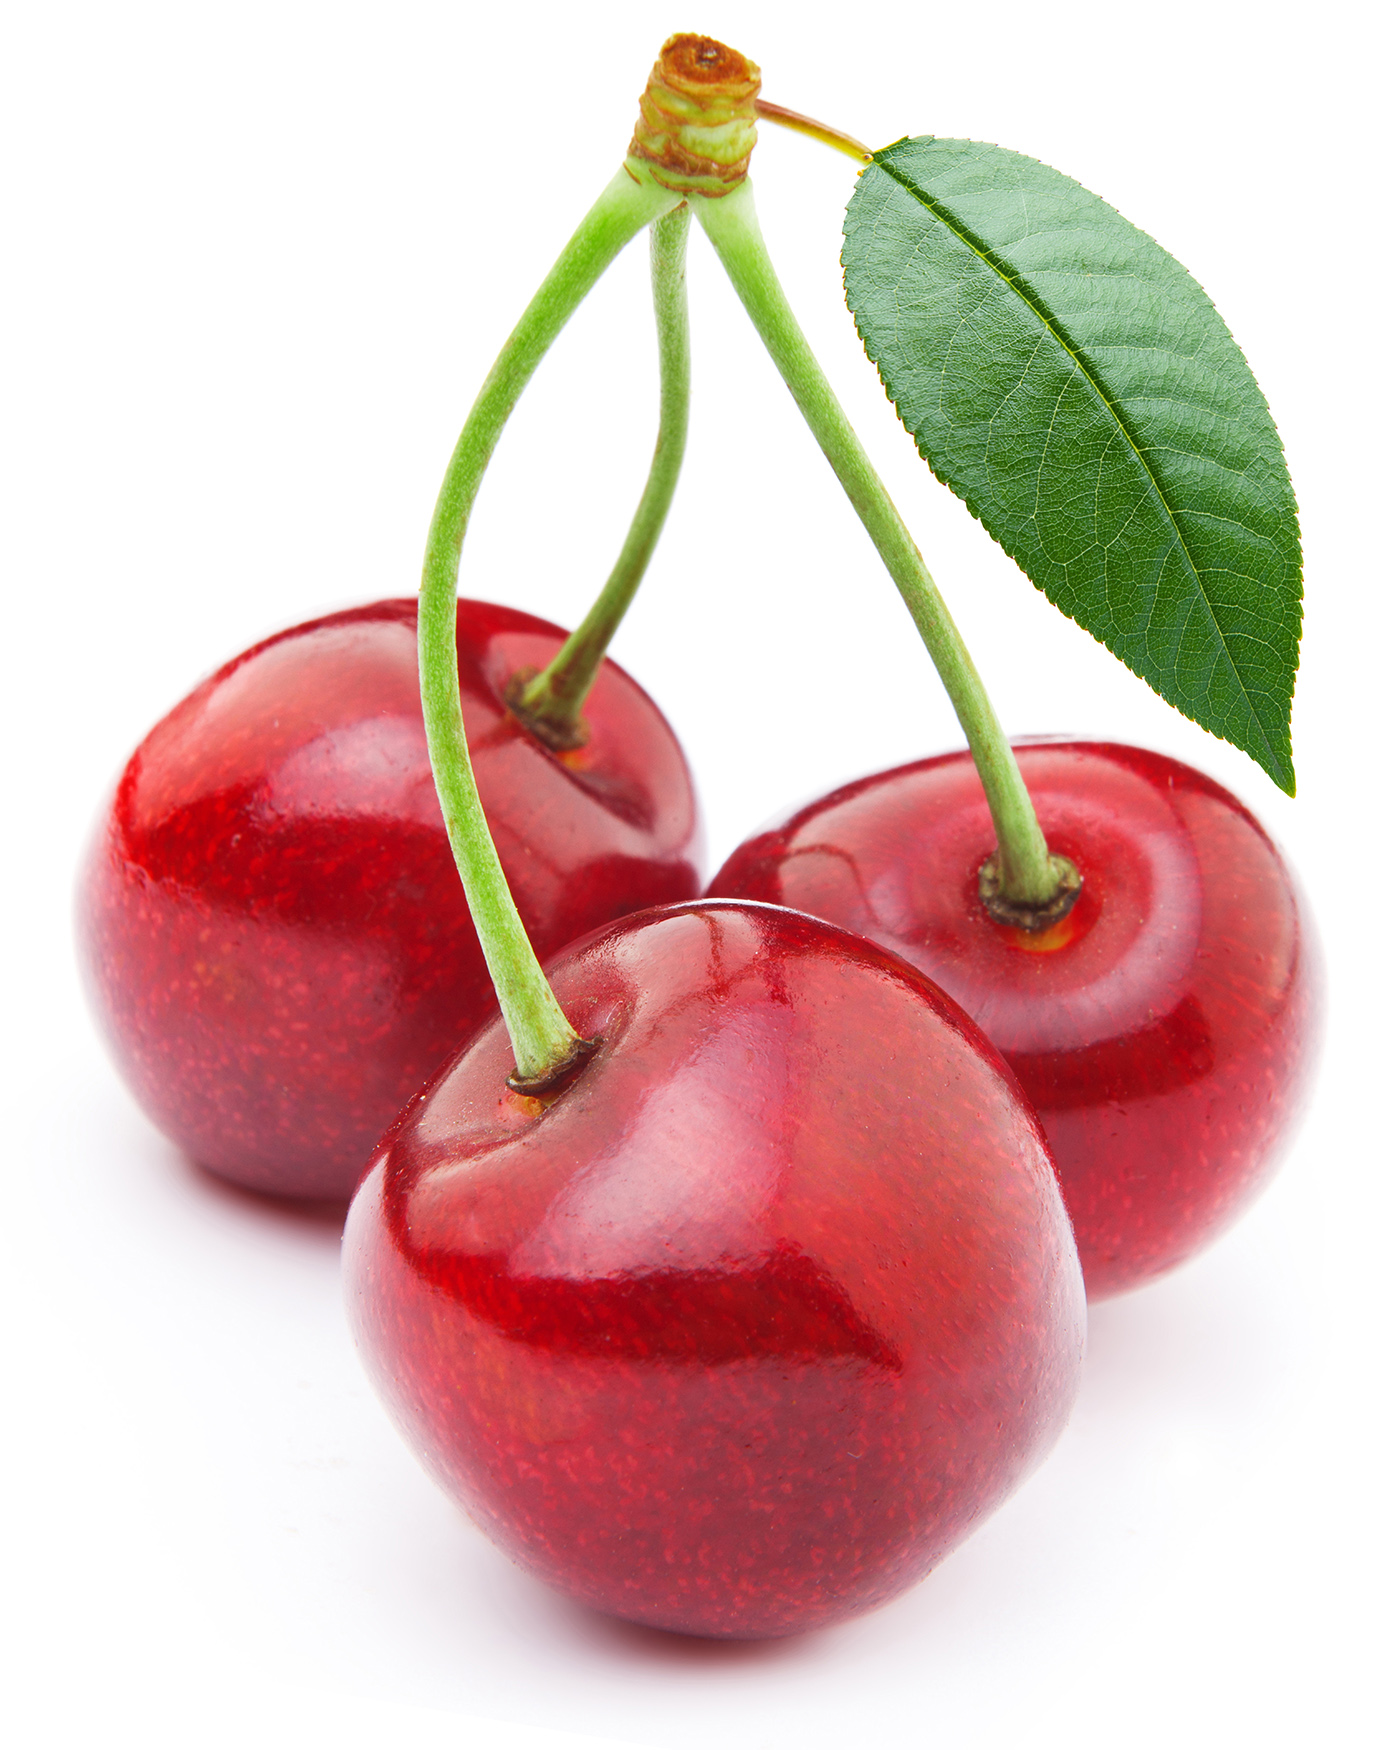 Red Cherry 50697 - Cherry Grape - Harvest season